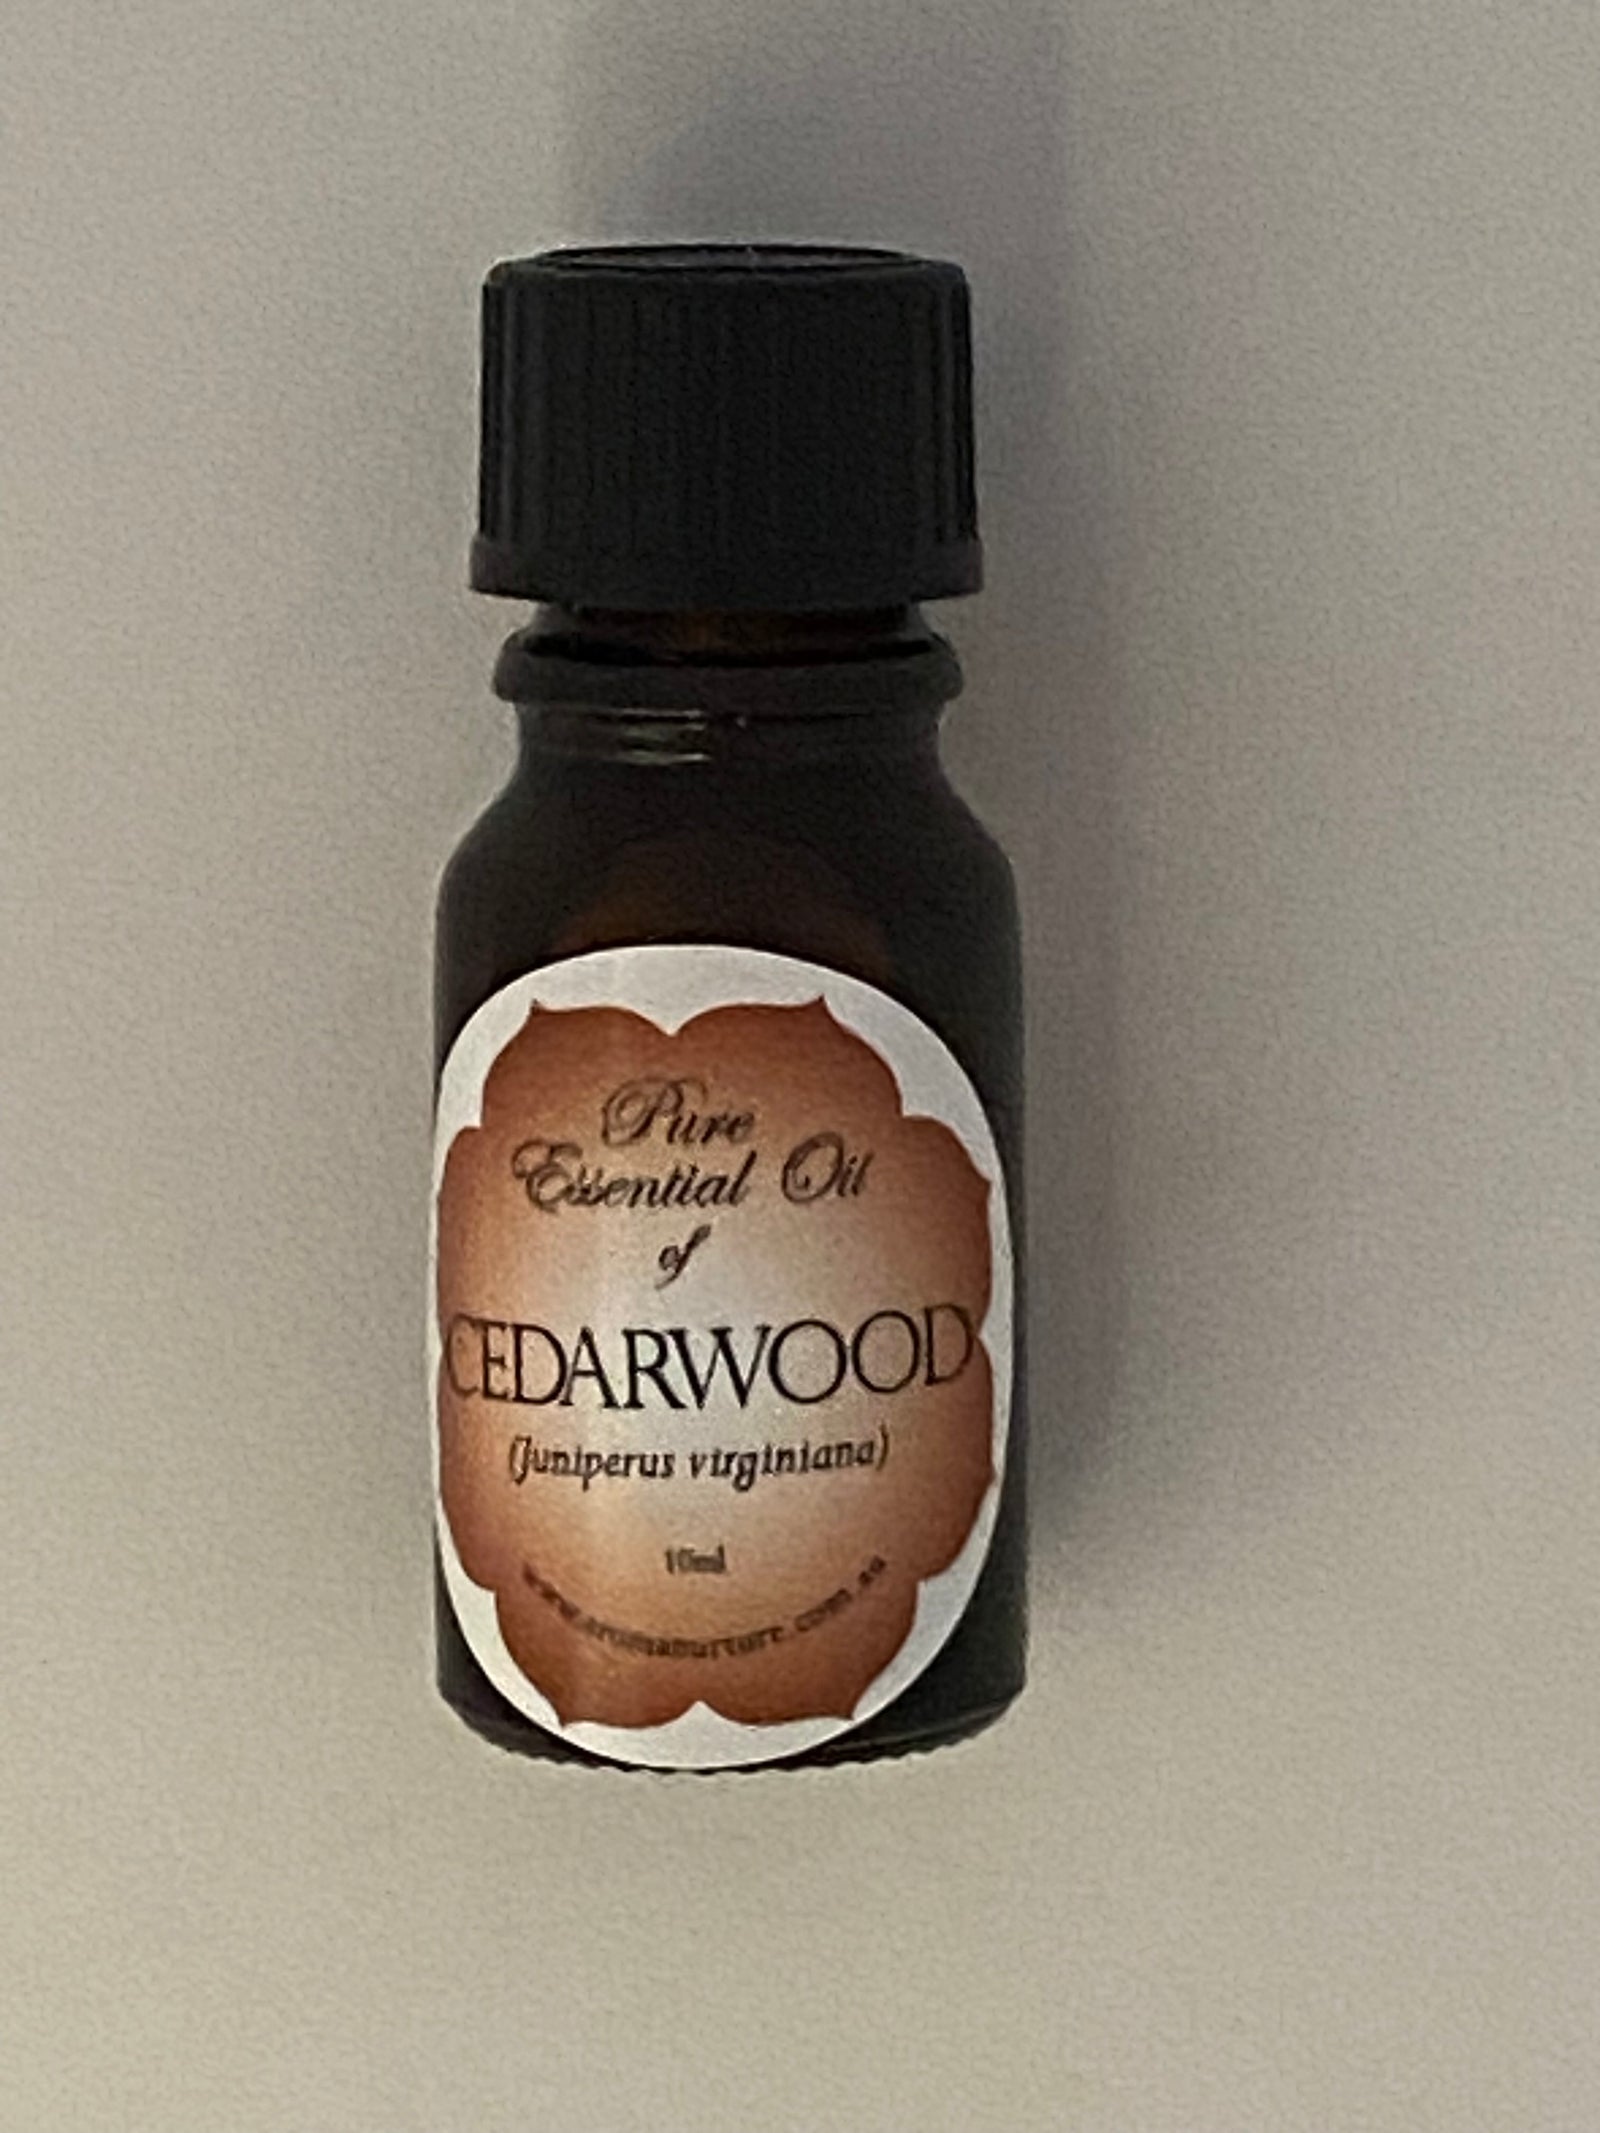 Pure essential oil of Cedarwood 10mls.(Juniperus virginiana)